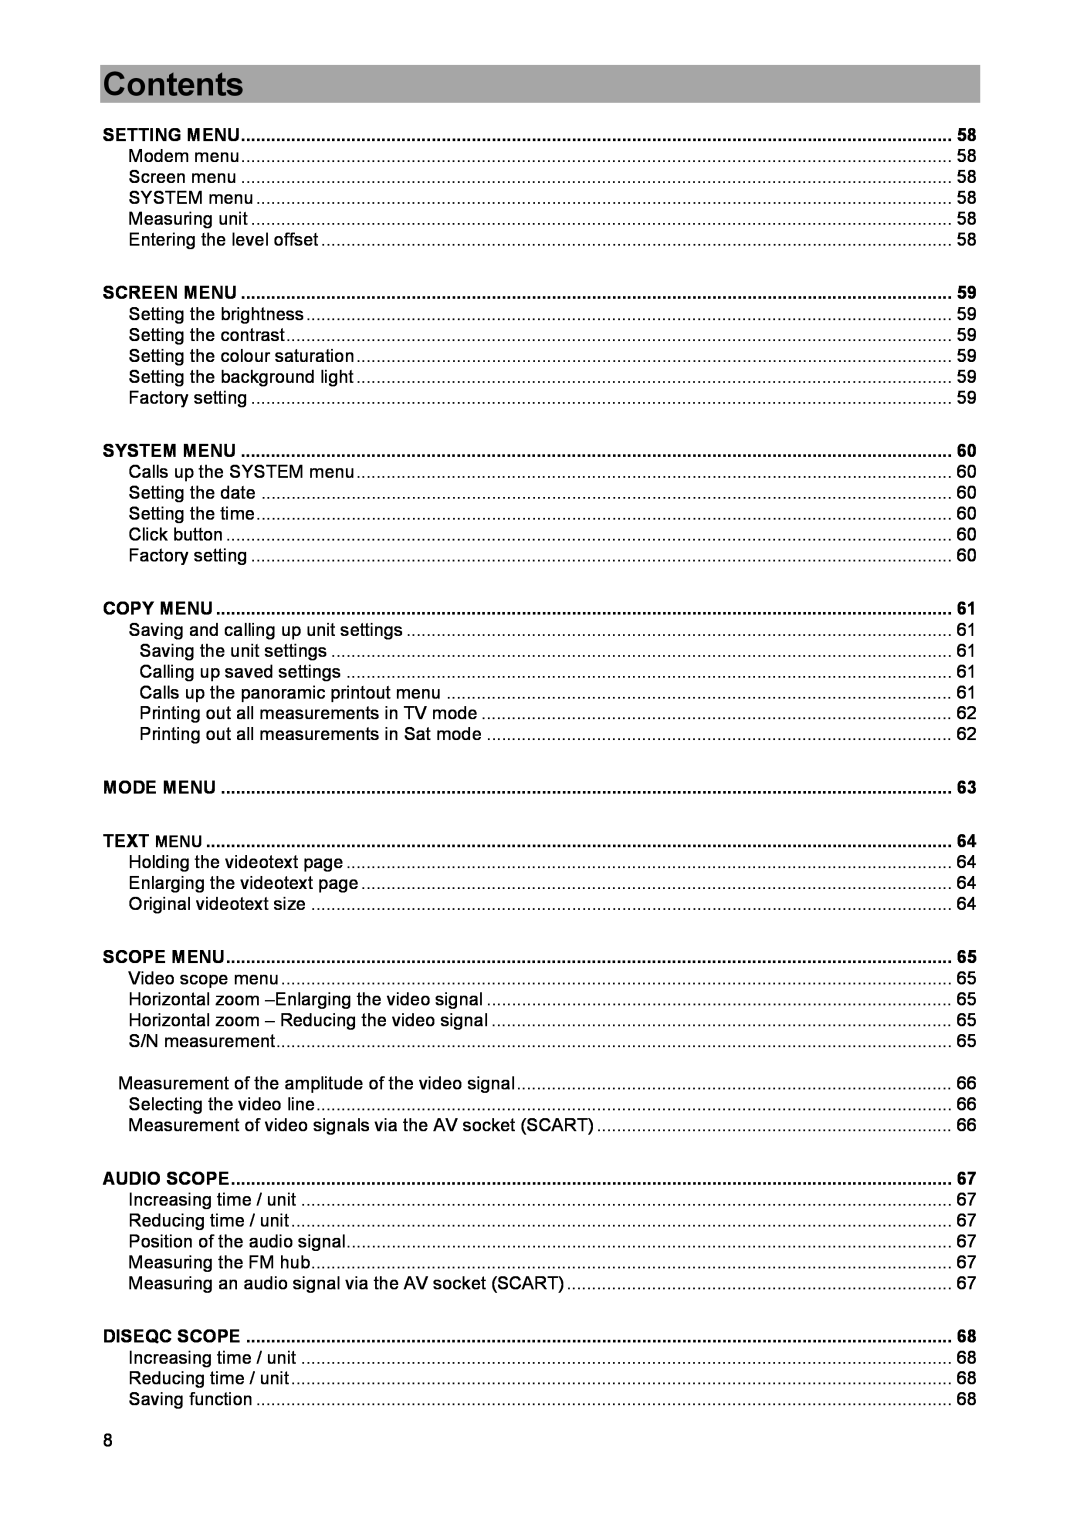 DreamGEAR MSK 33 manual Contents, Setting Menu, Screen Menu, System Menu, Copy Menu, Mode Menu, Text Menu, Scope Menu 